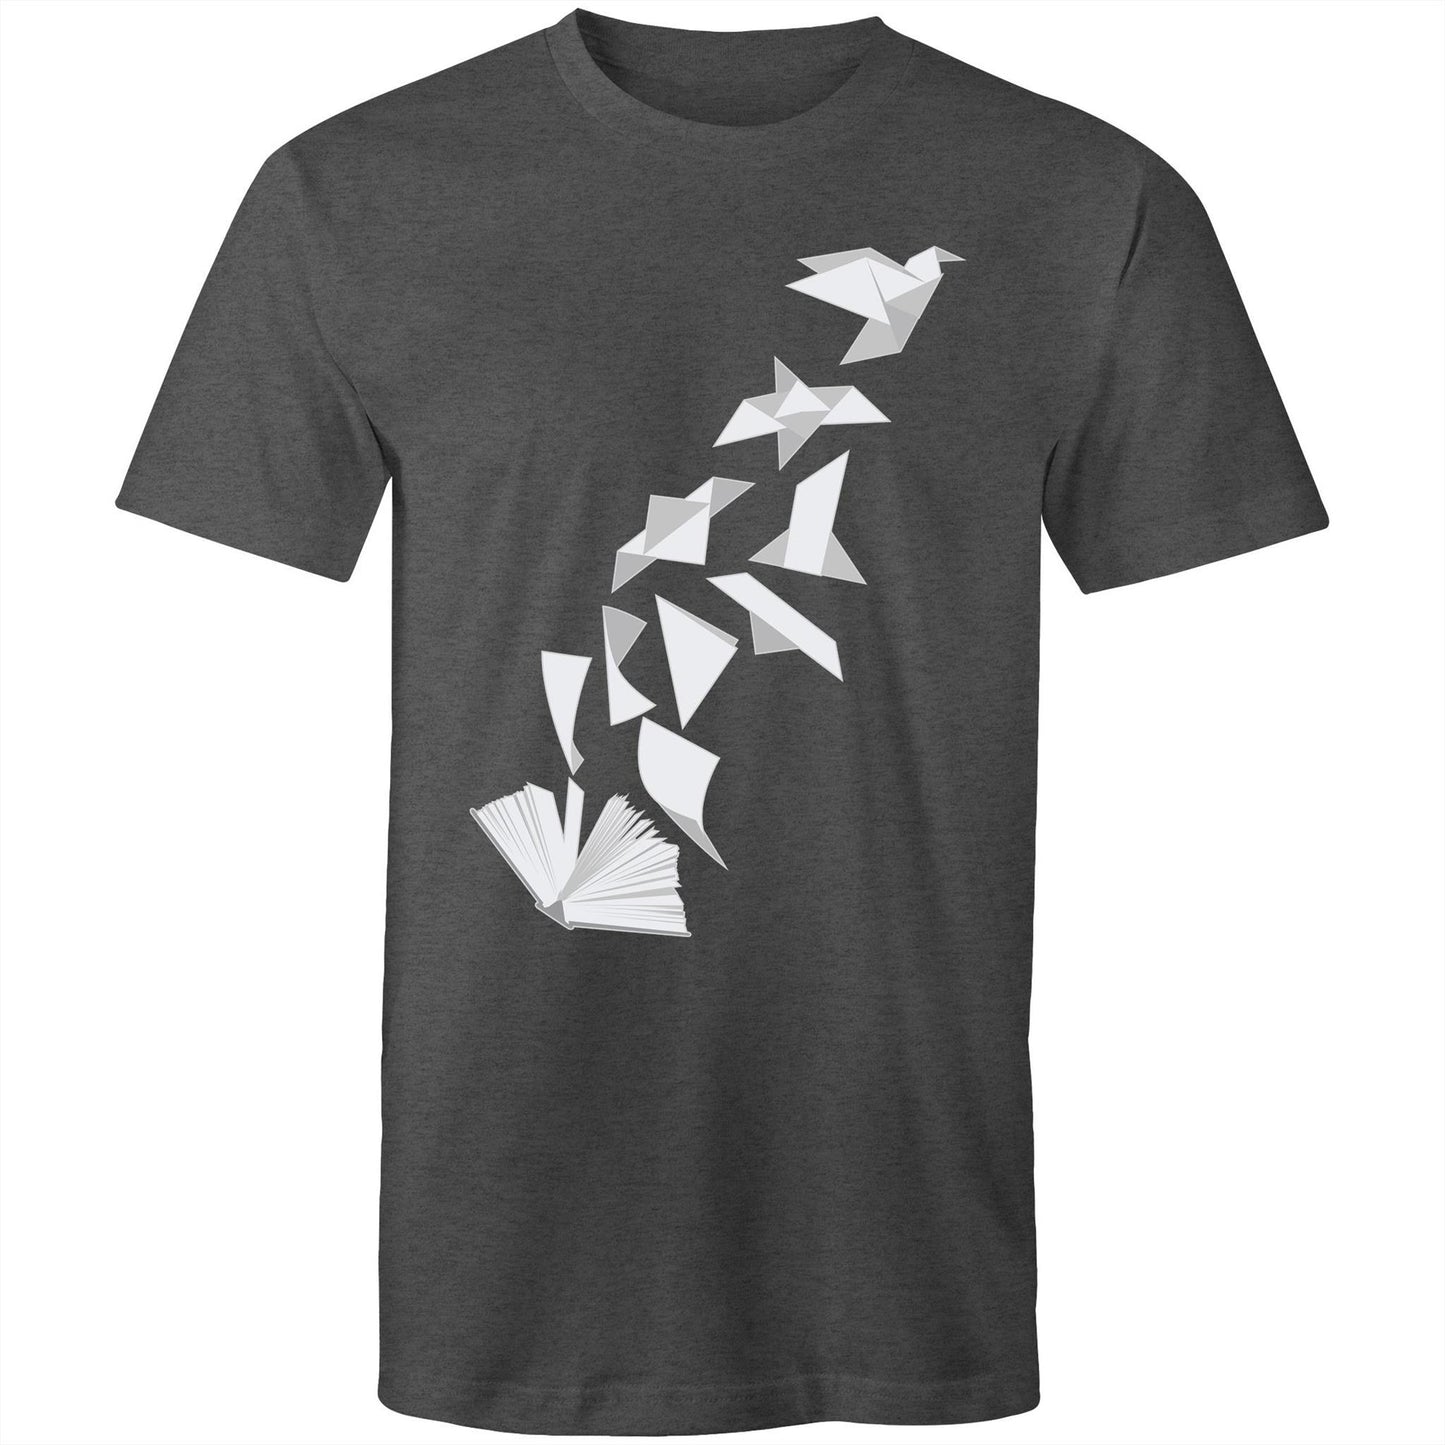 Book to Bird - Men's T-Shirt